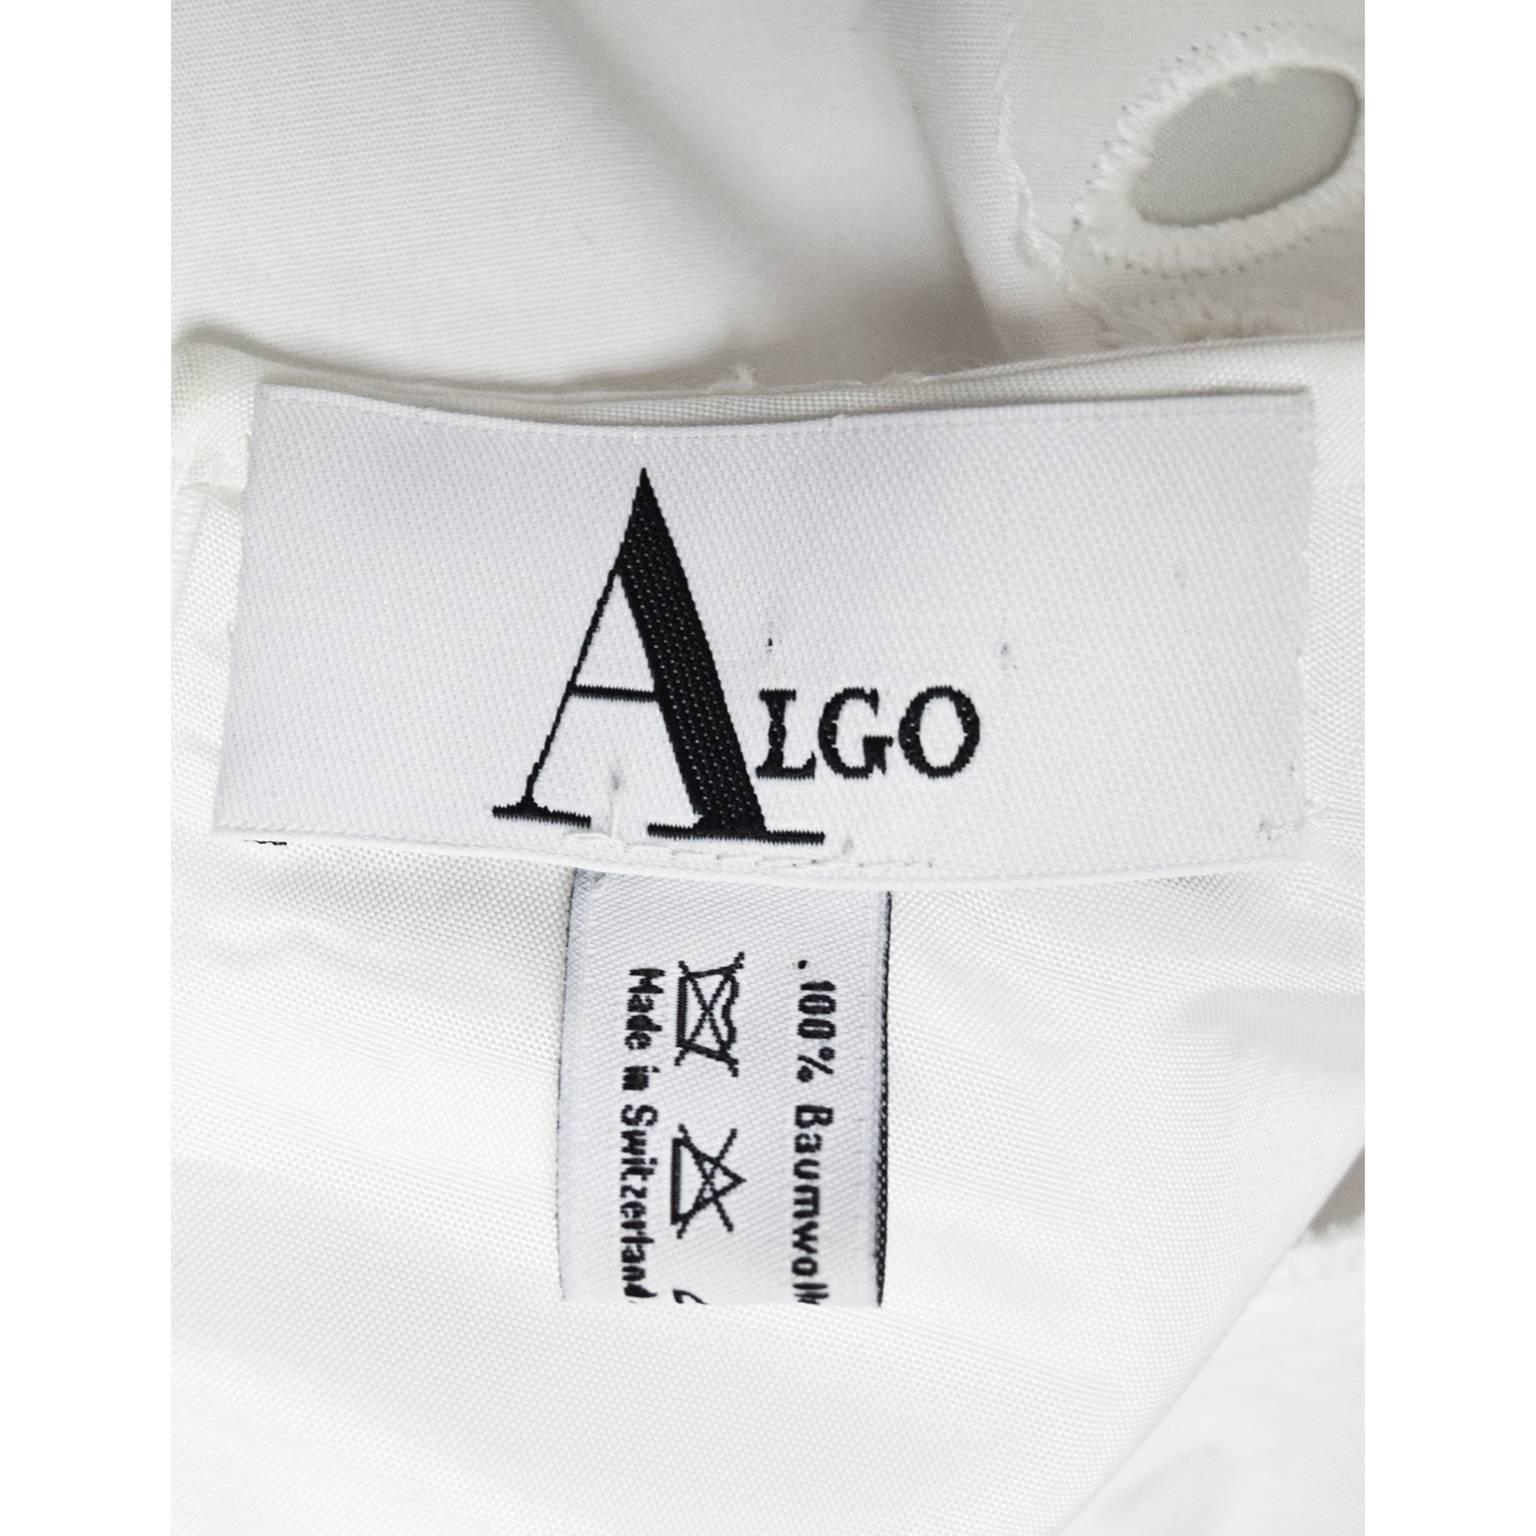 Algo White Eyelet Scalloped Neckline Short Sleeved Blouse  In Excellent Condition For Sale In Henrico, VA